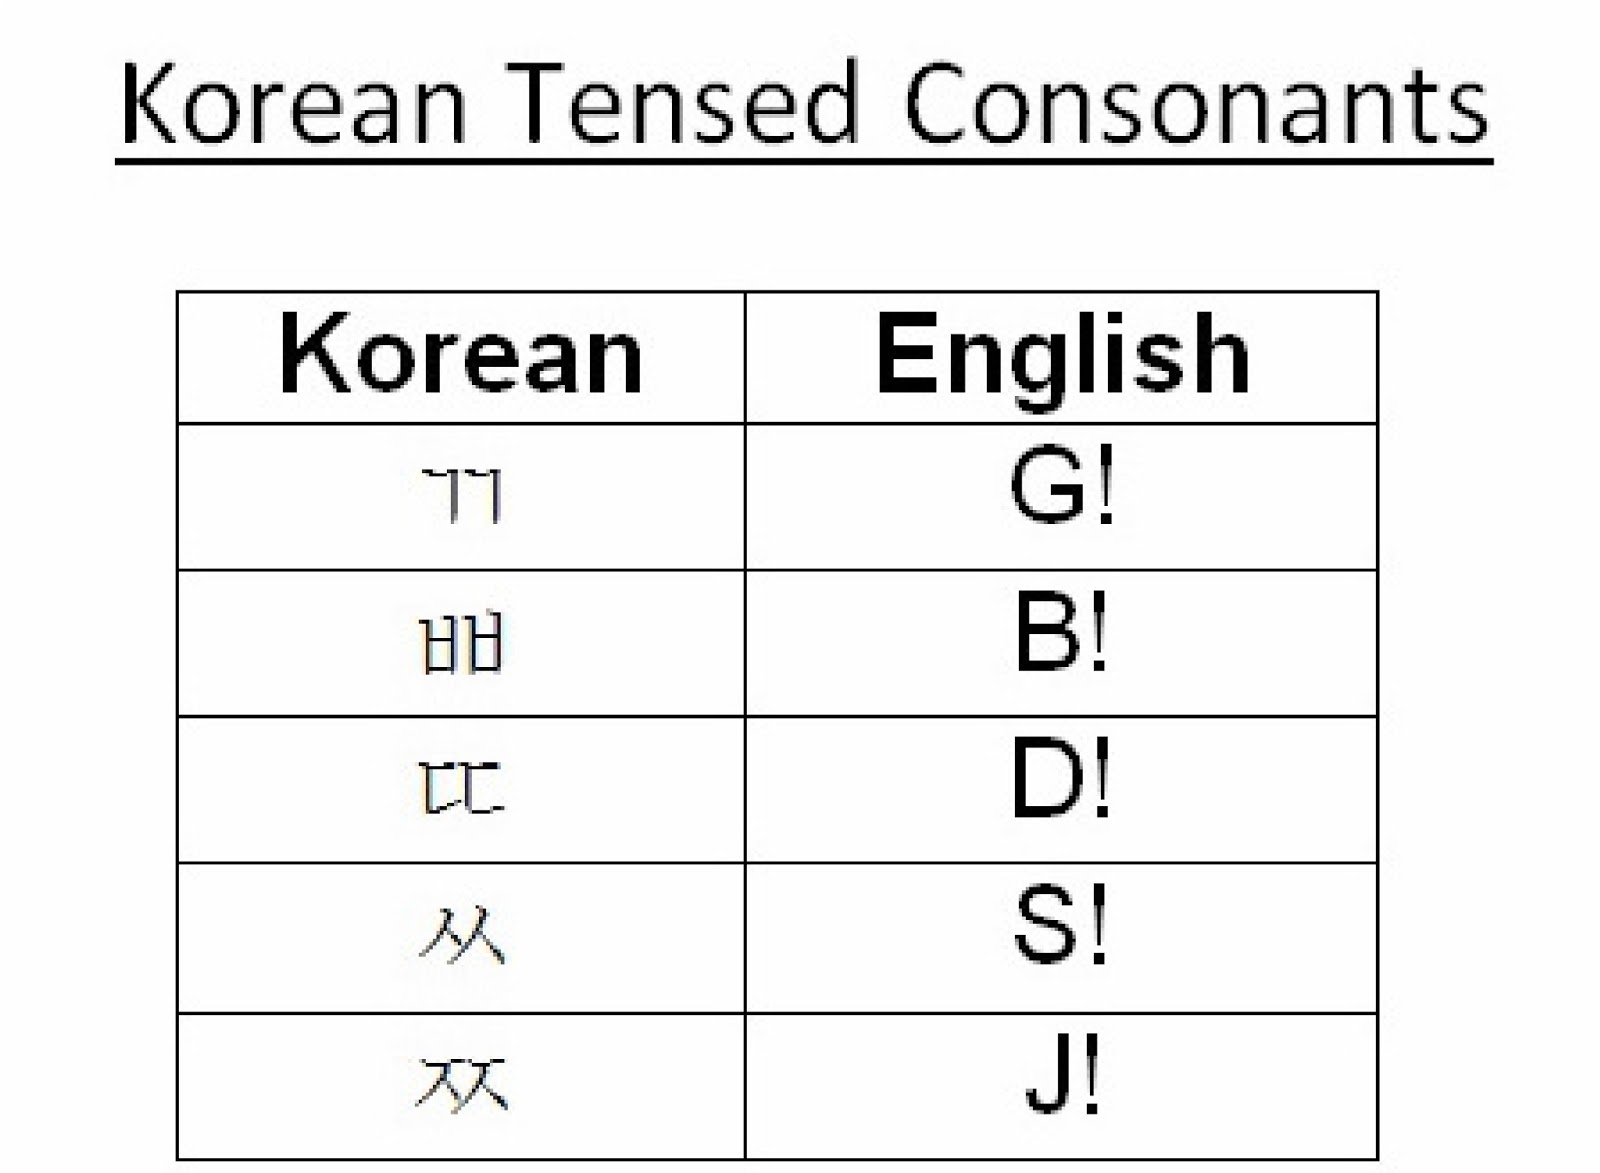 translate english to korean characters